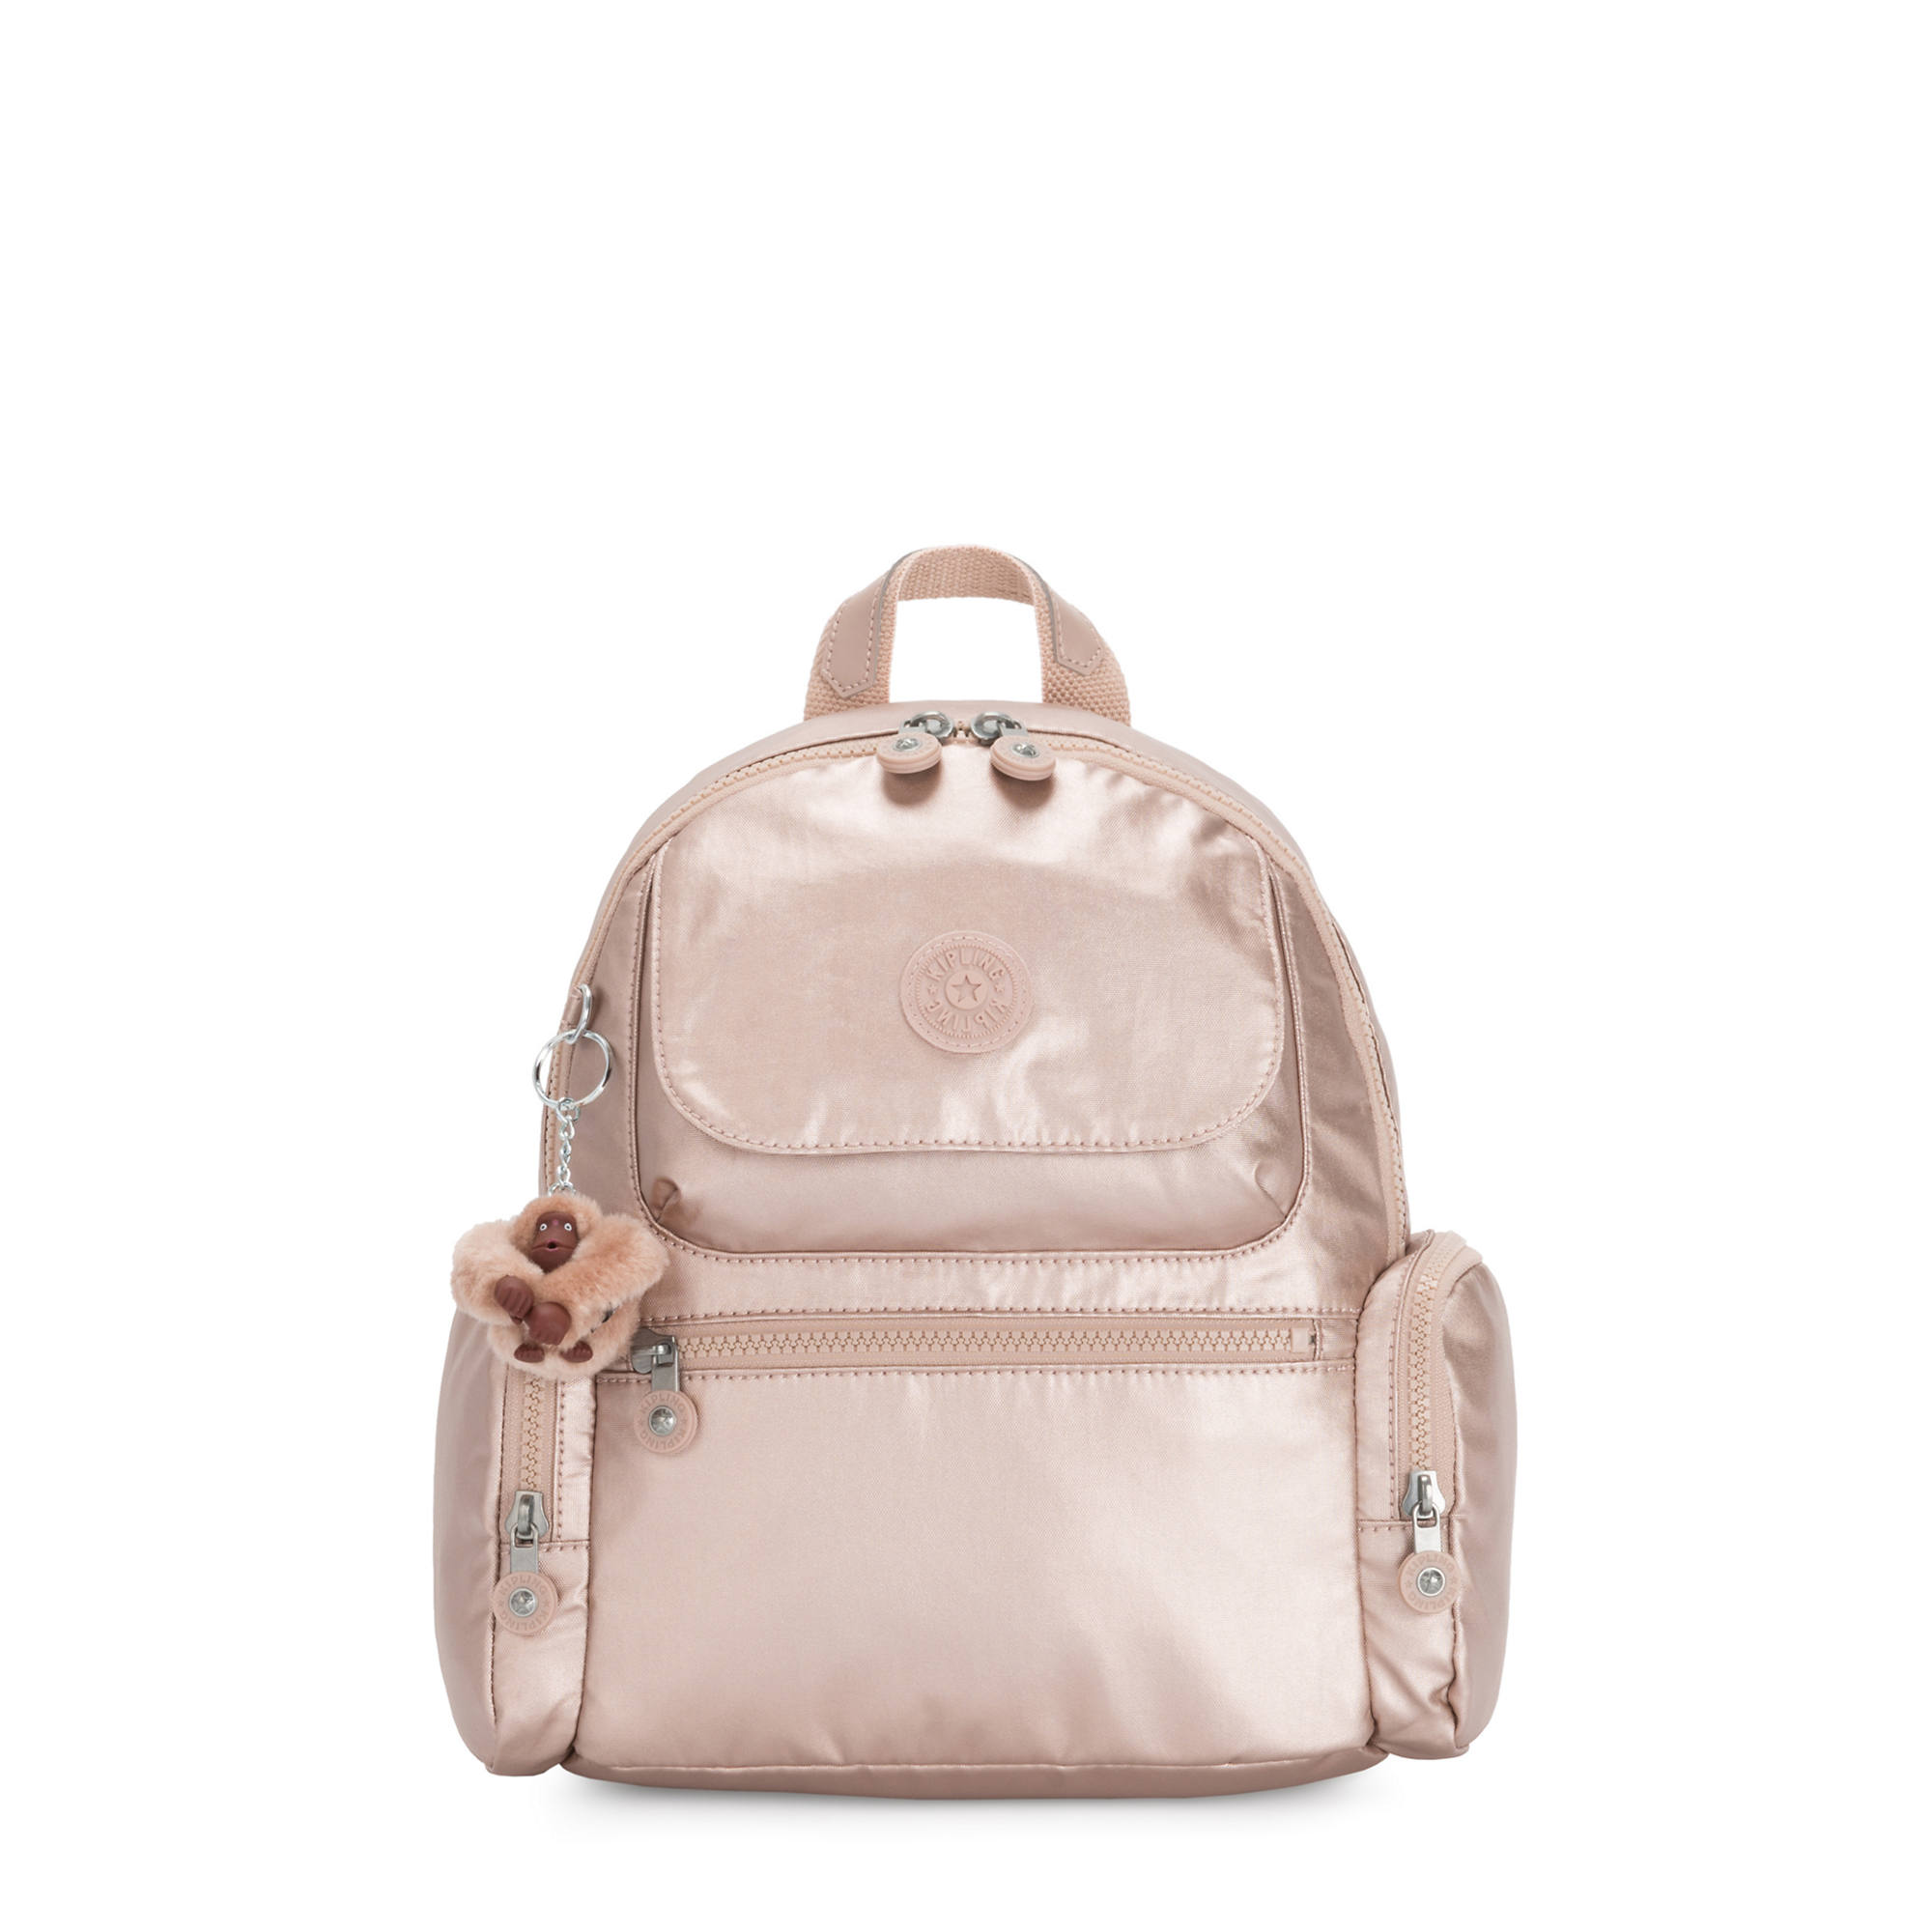 Matta Small Metallic Backpack,Quartz Metallic,large-zoomed